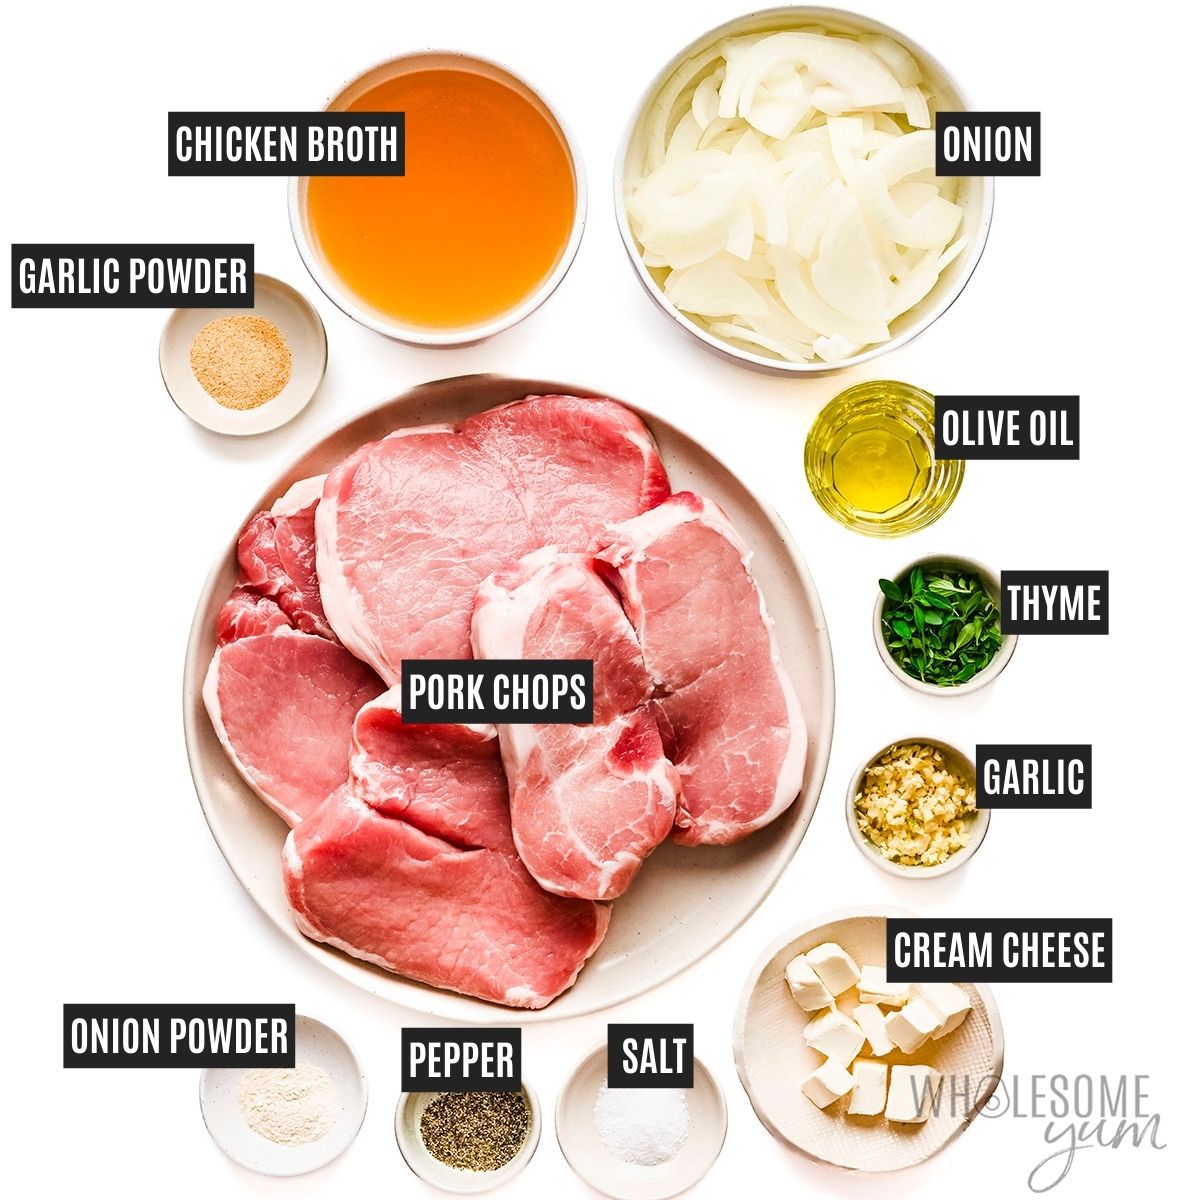 Smothered pork chop recipe ingredients.